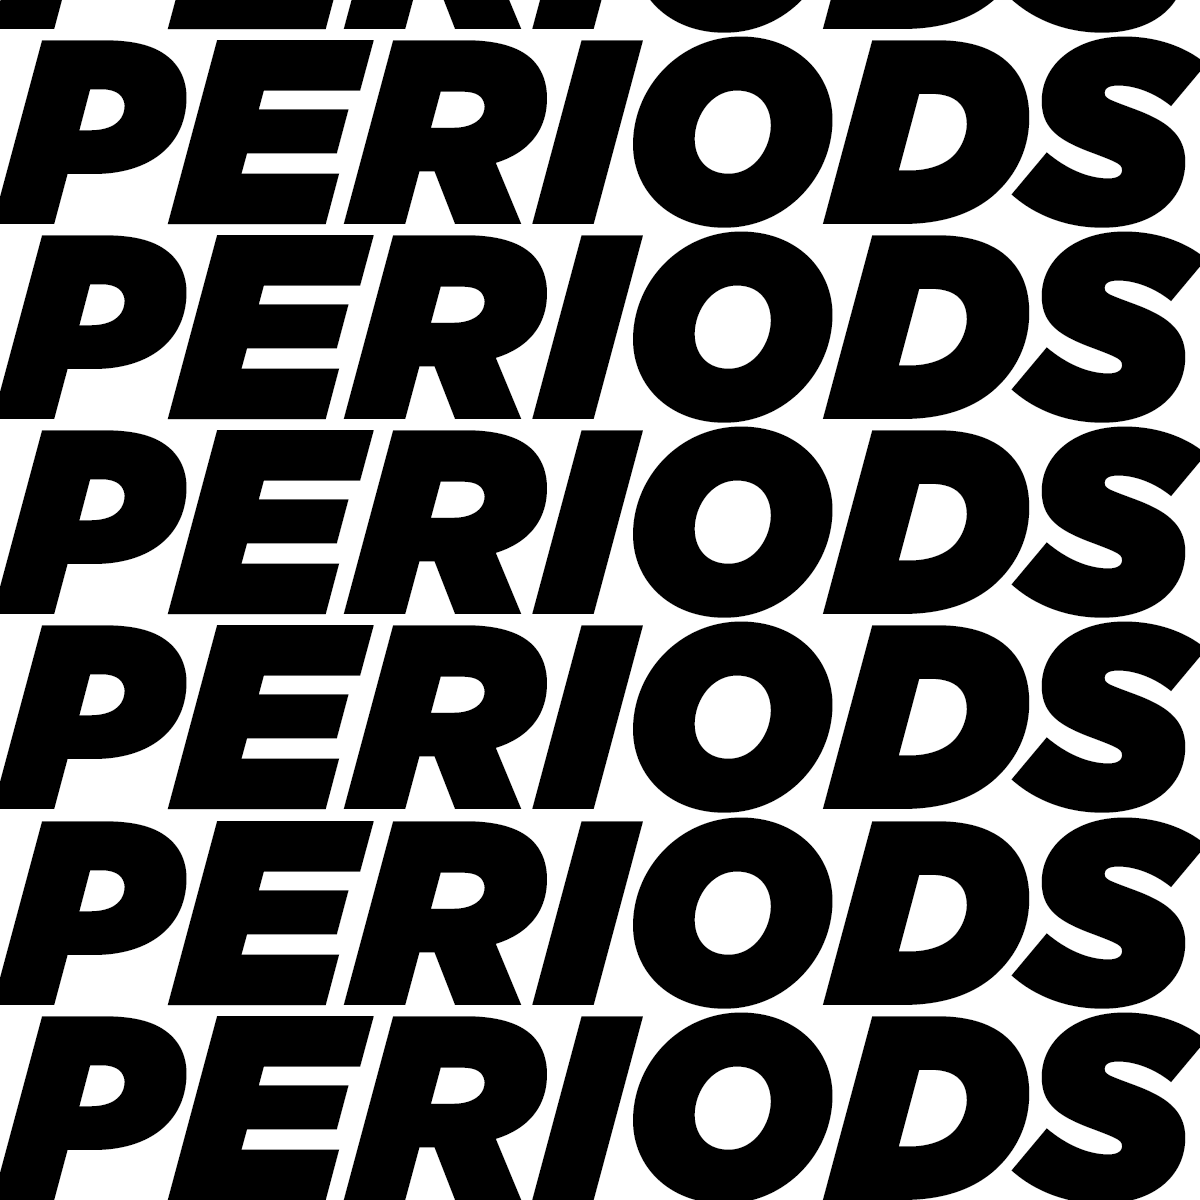 Periods meme gif